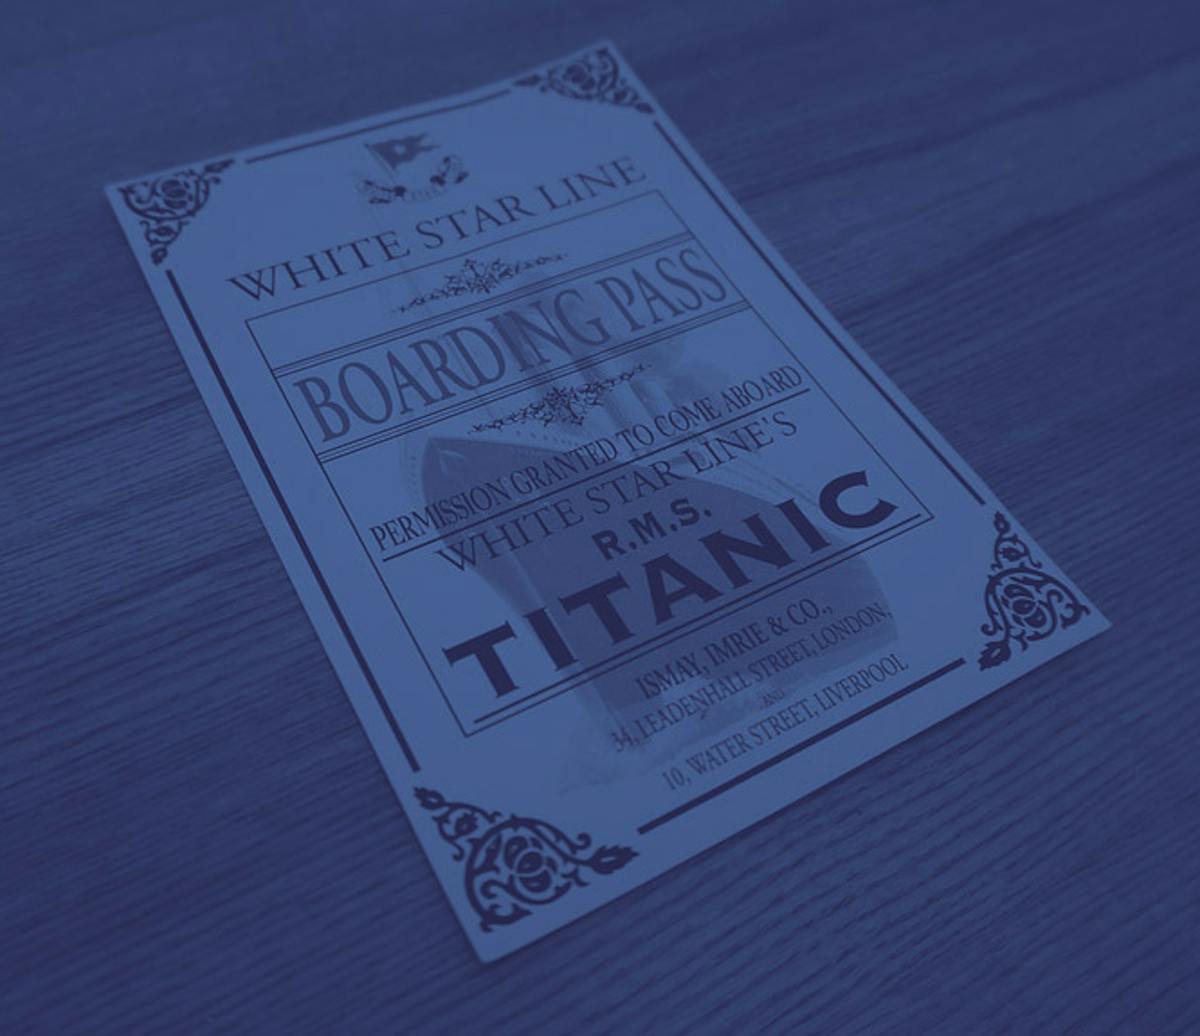 Titanic passenger list